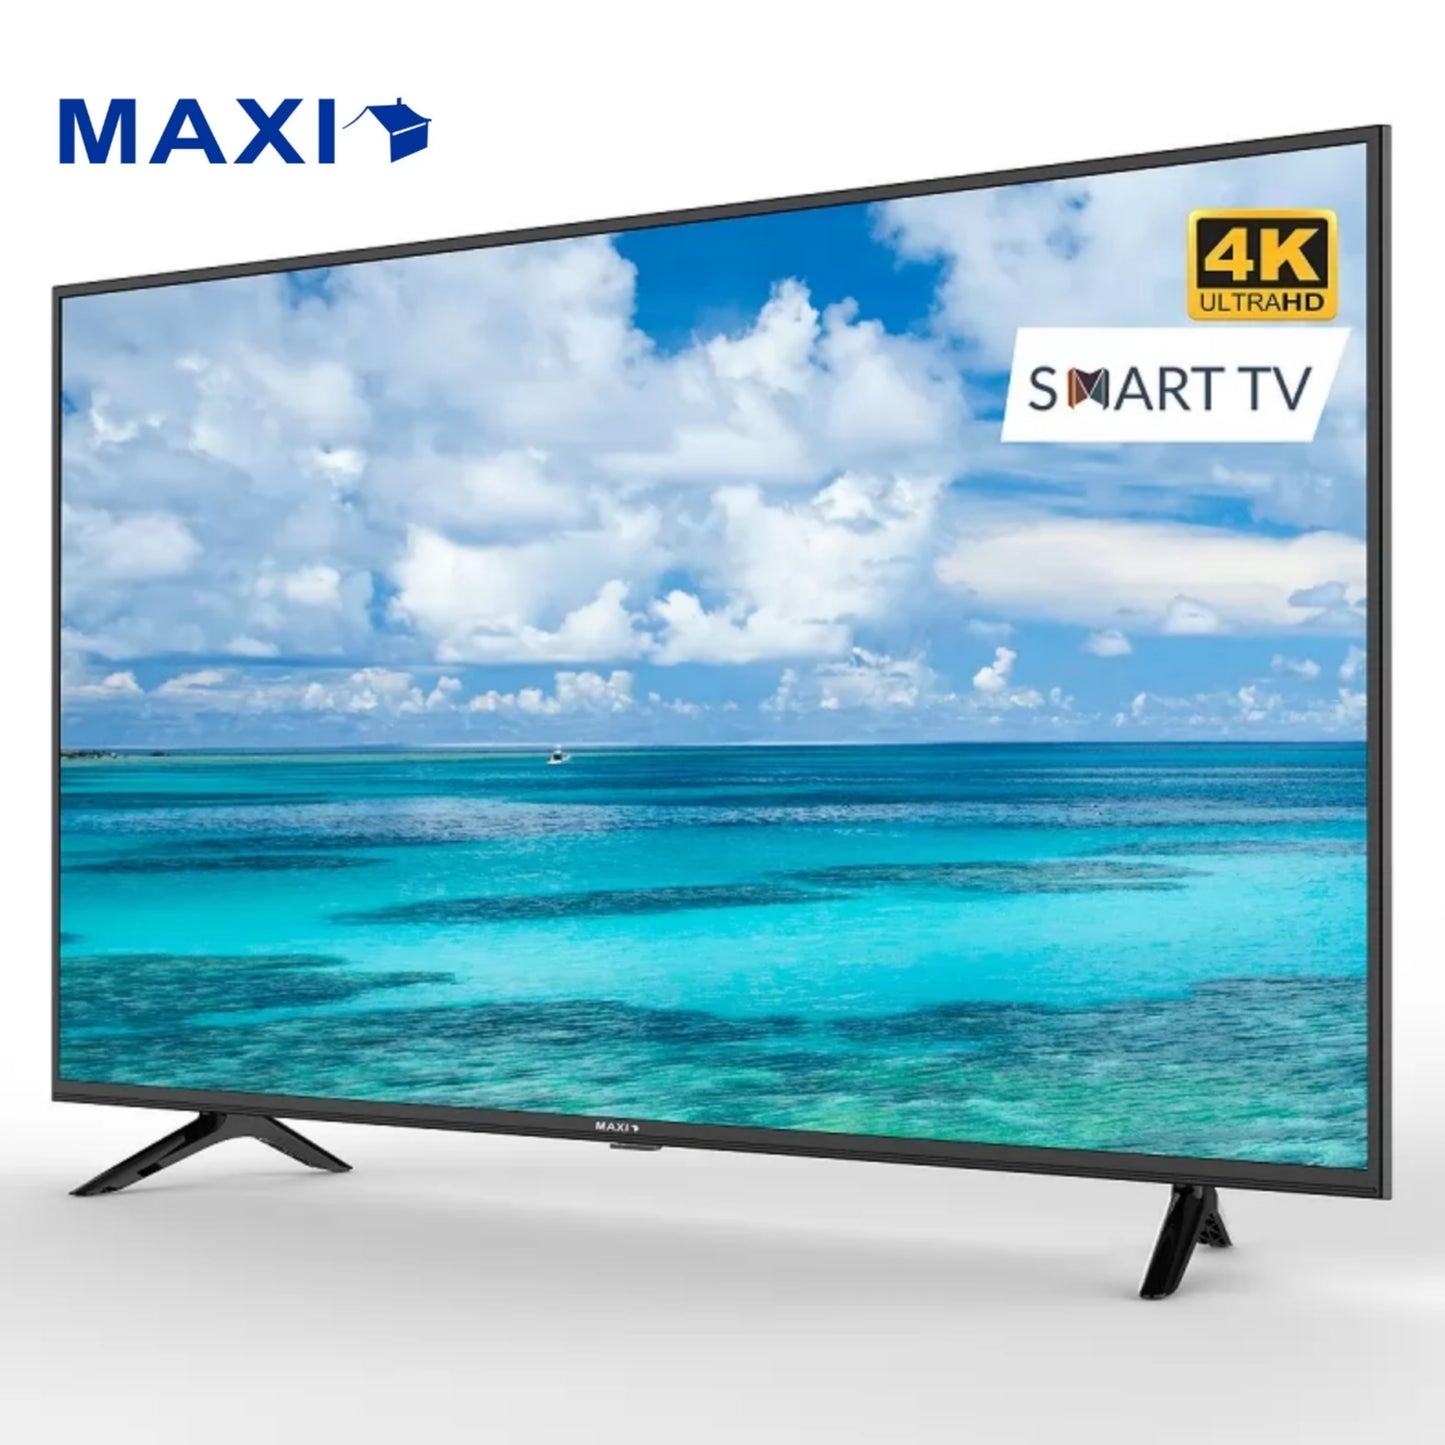 Maxi 50 Inch 50D2010 Smart Ultra HD LED TV + Netflix, Youtube, Miracast (Angle View) - Brand New